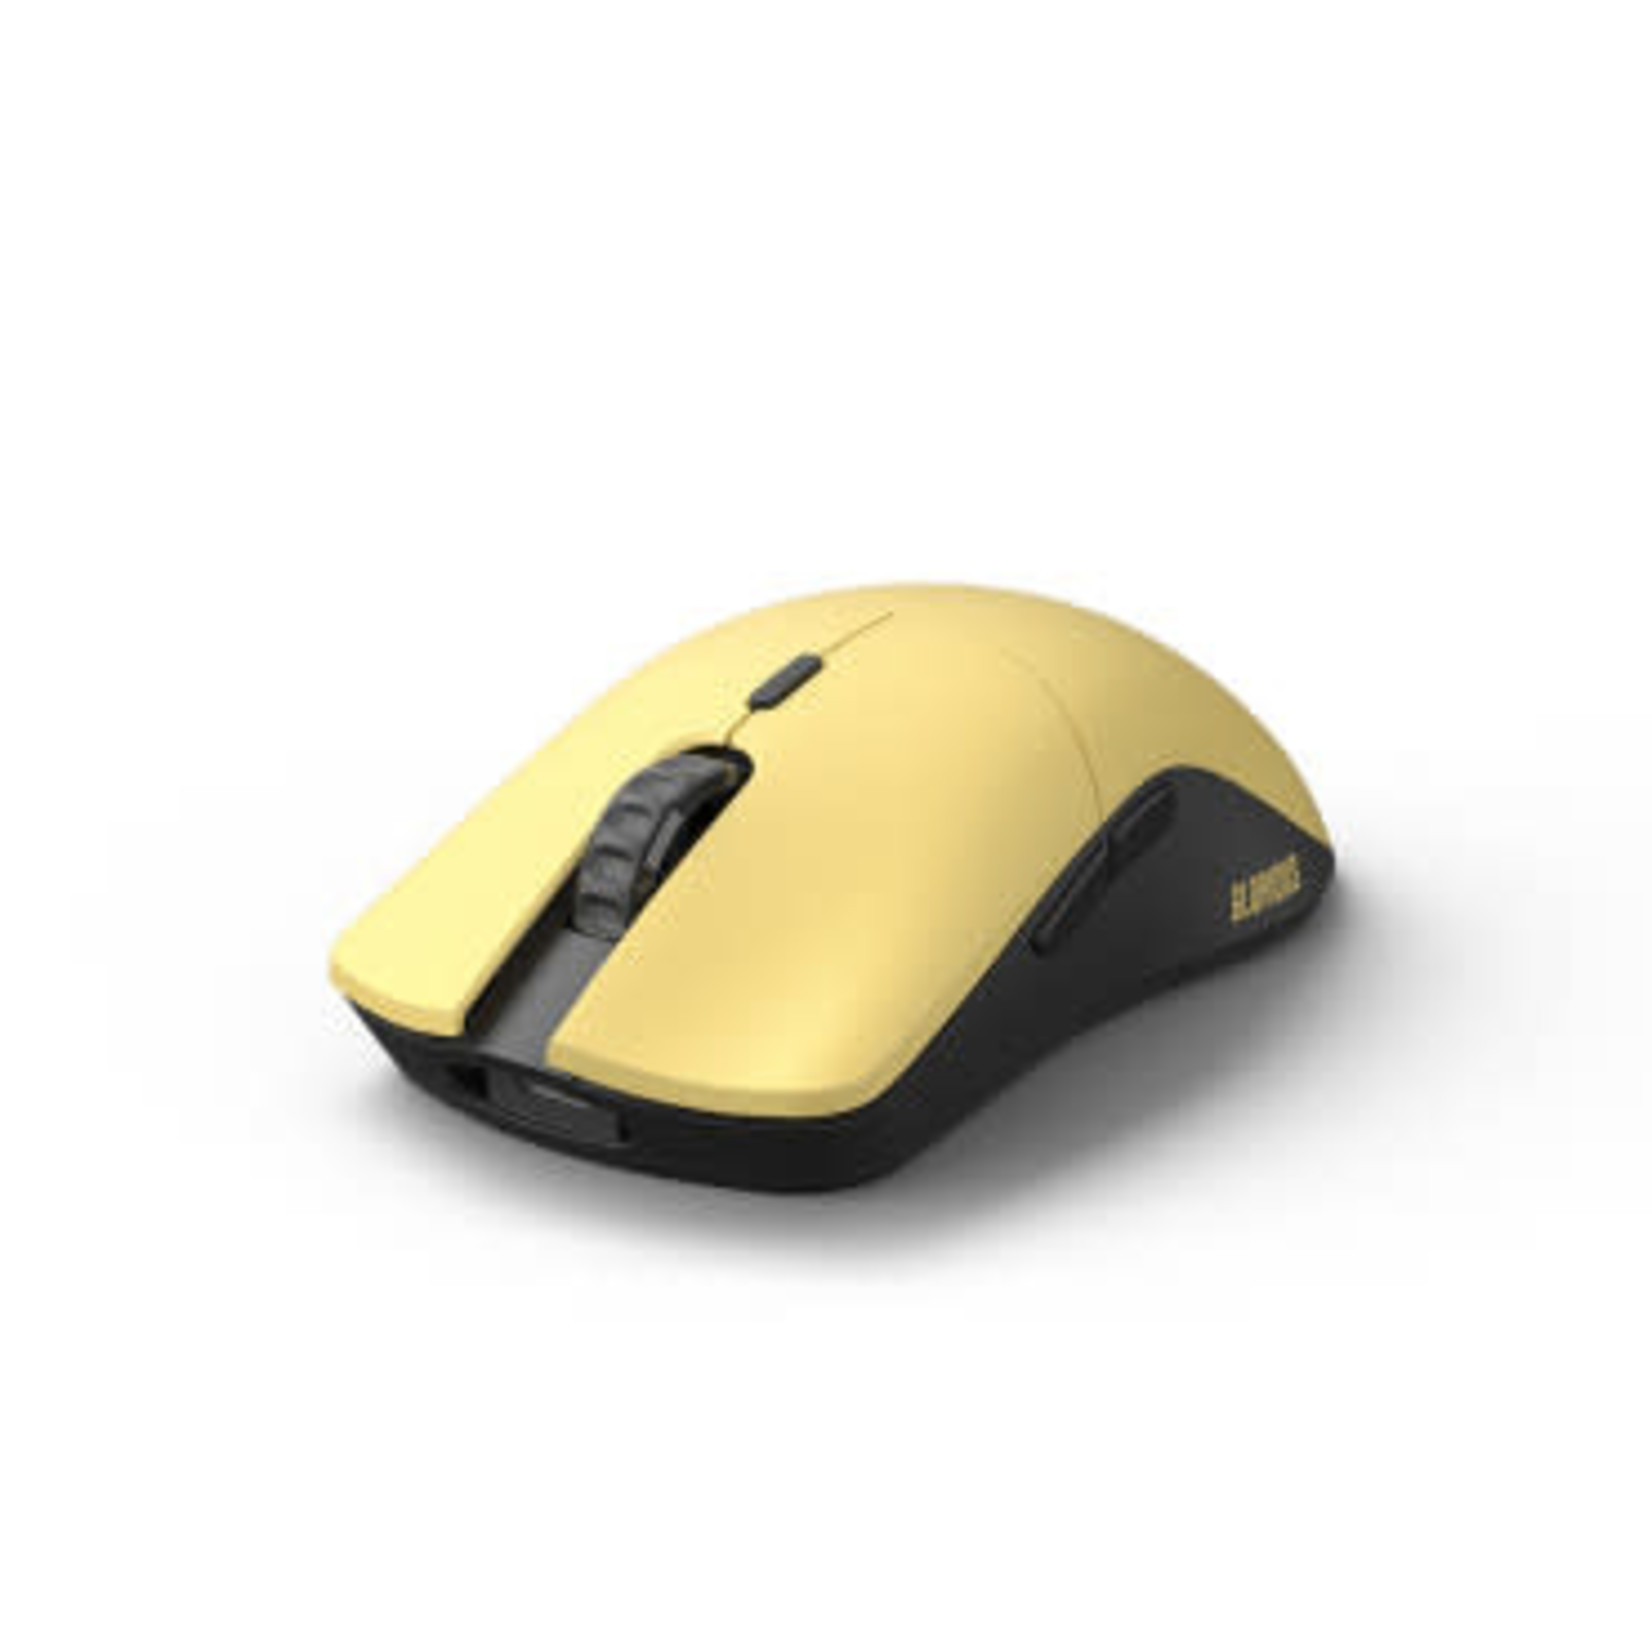 Glorious Glorious Model O Pro Wireless Golden Panda Mouse